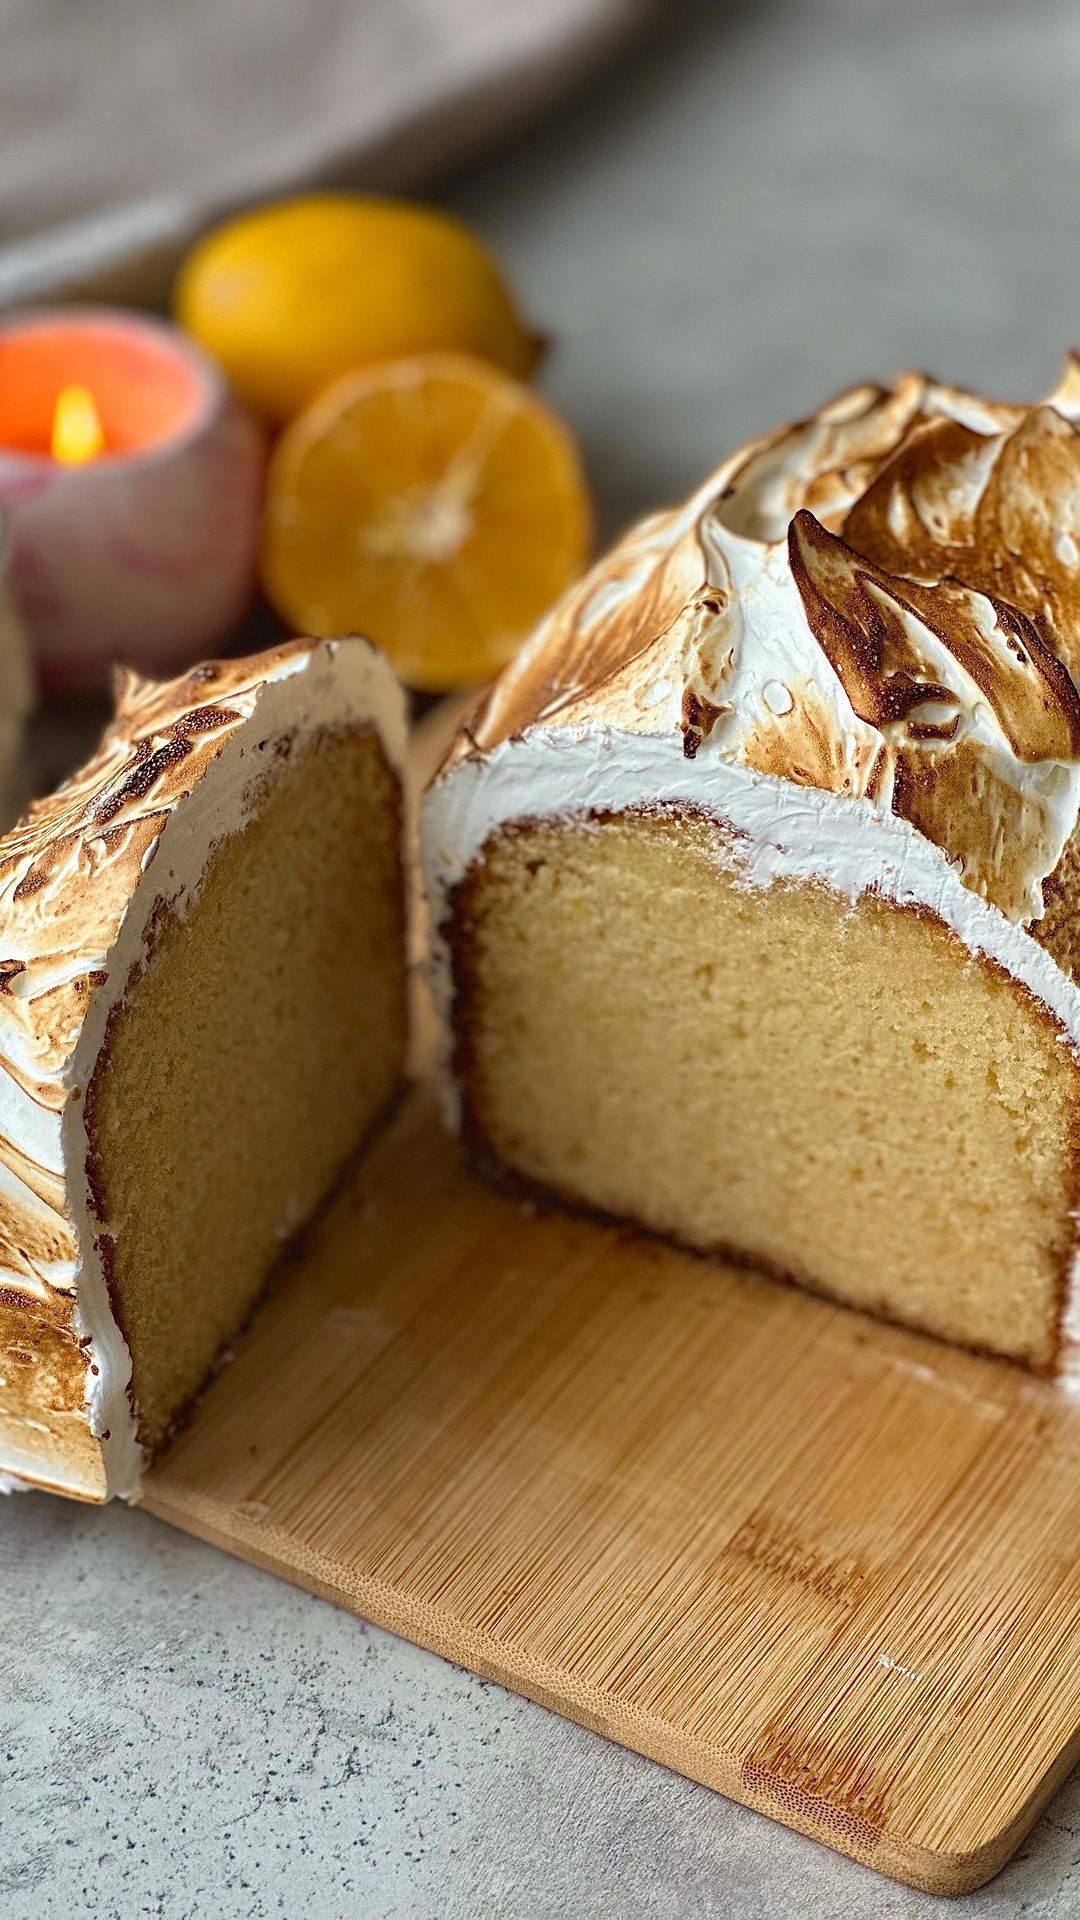 Lemon Cake with Meringue Topping